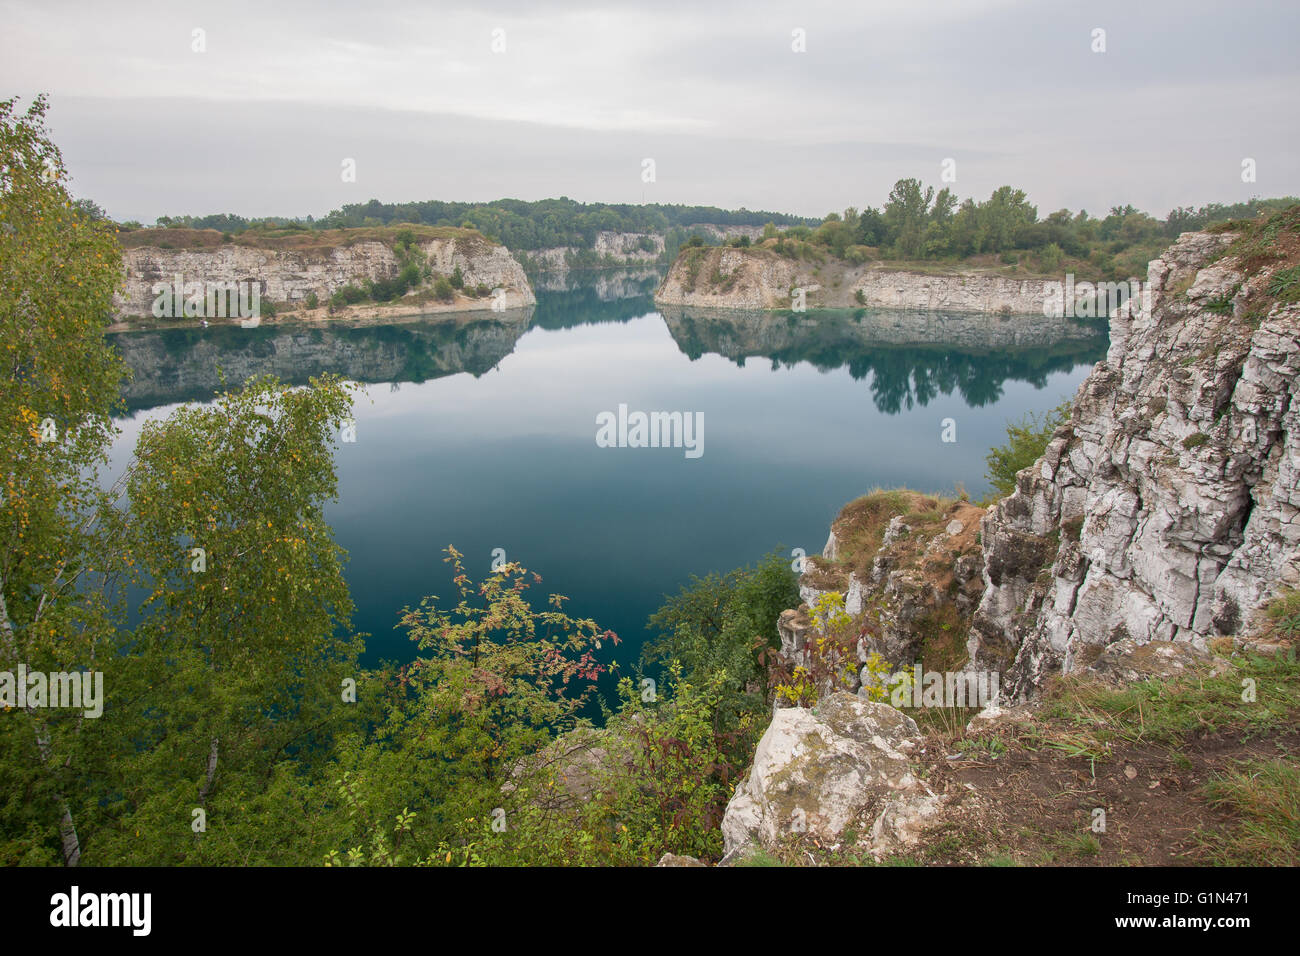 View of the flooded mine in Krakow - Zakrzowek lake view Stock Photo